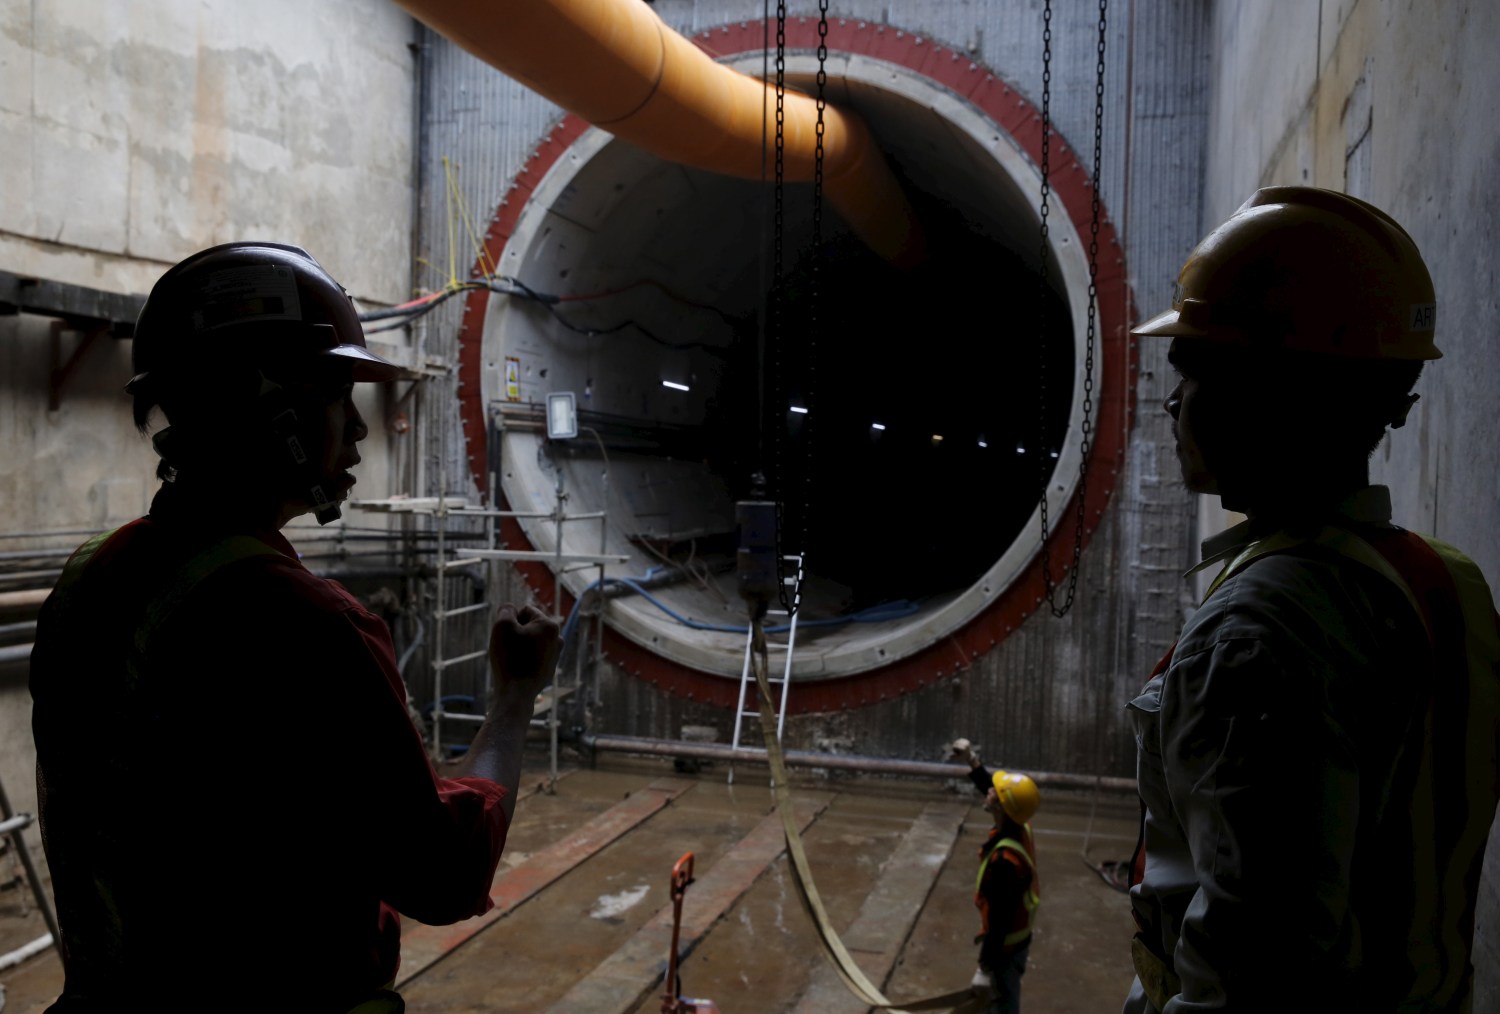 Construction workers stand near an underground MRT (Mass rapid transit system) tunnel in Jakarta